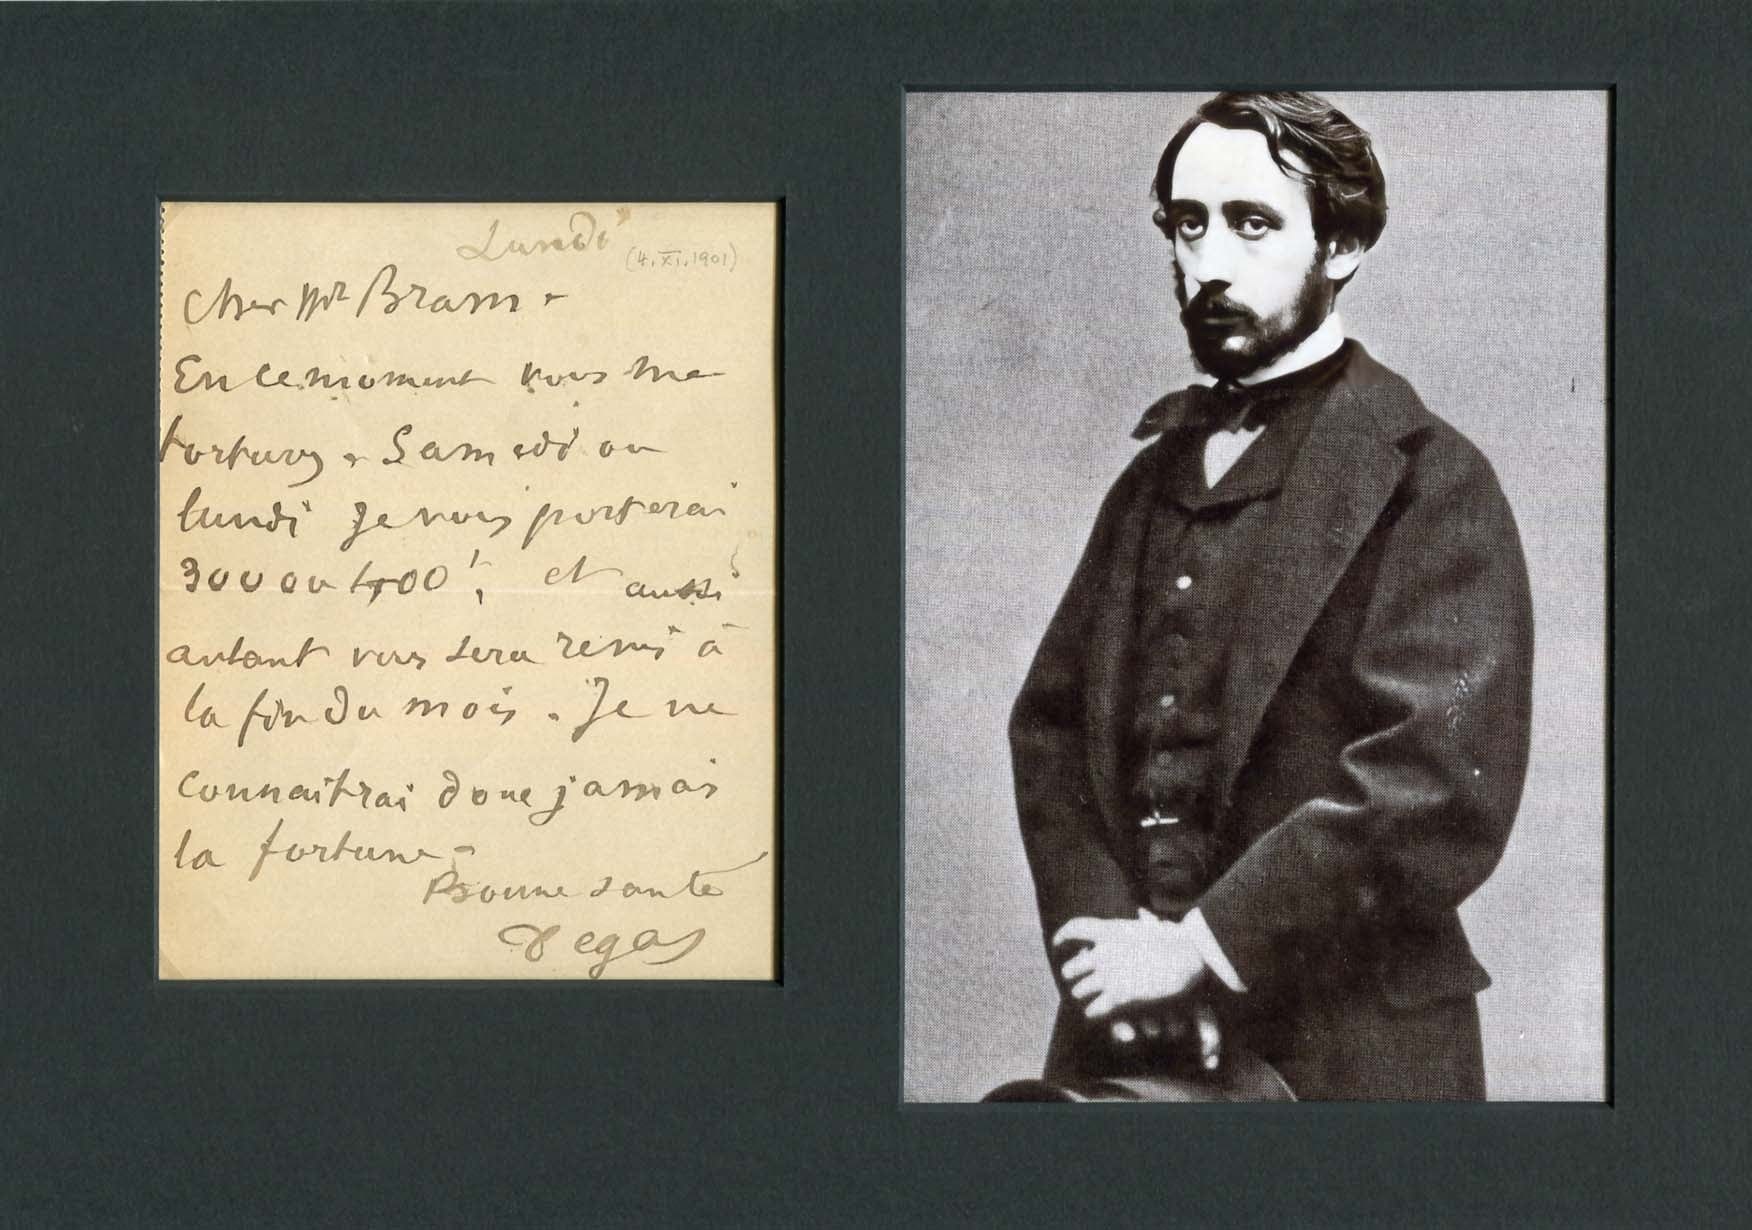 Edgar Degas Autograph Autogramm | ID 7893935685781